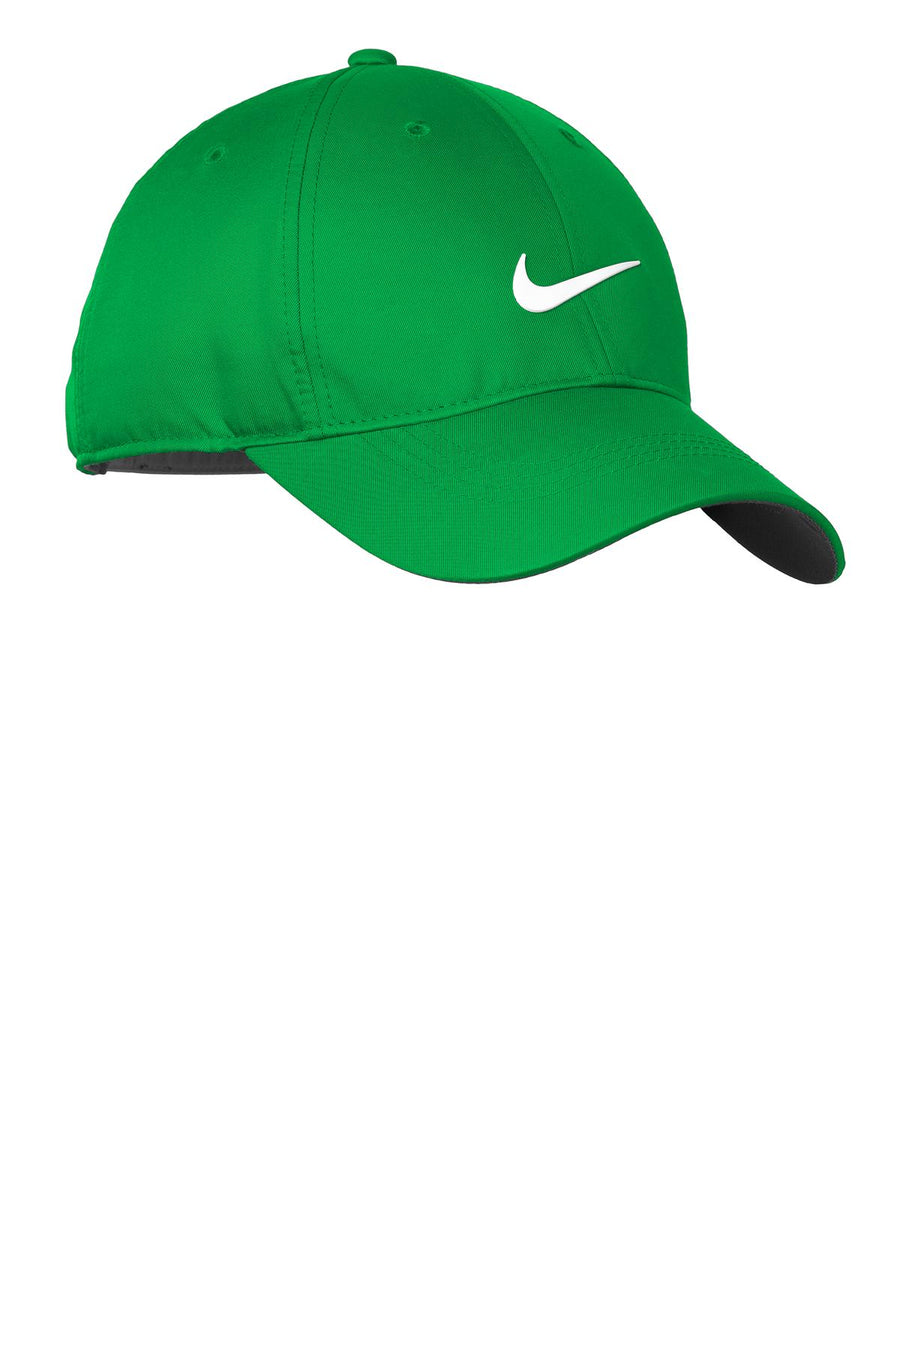 Nike Dri-FIT Swoosh Front Cap.